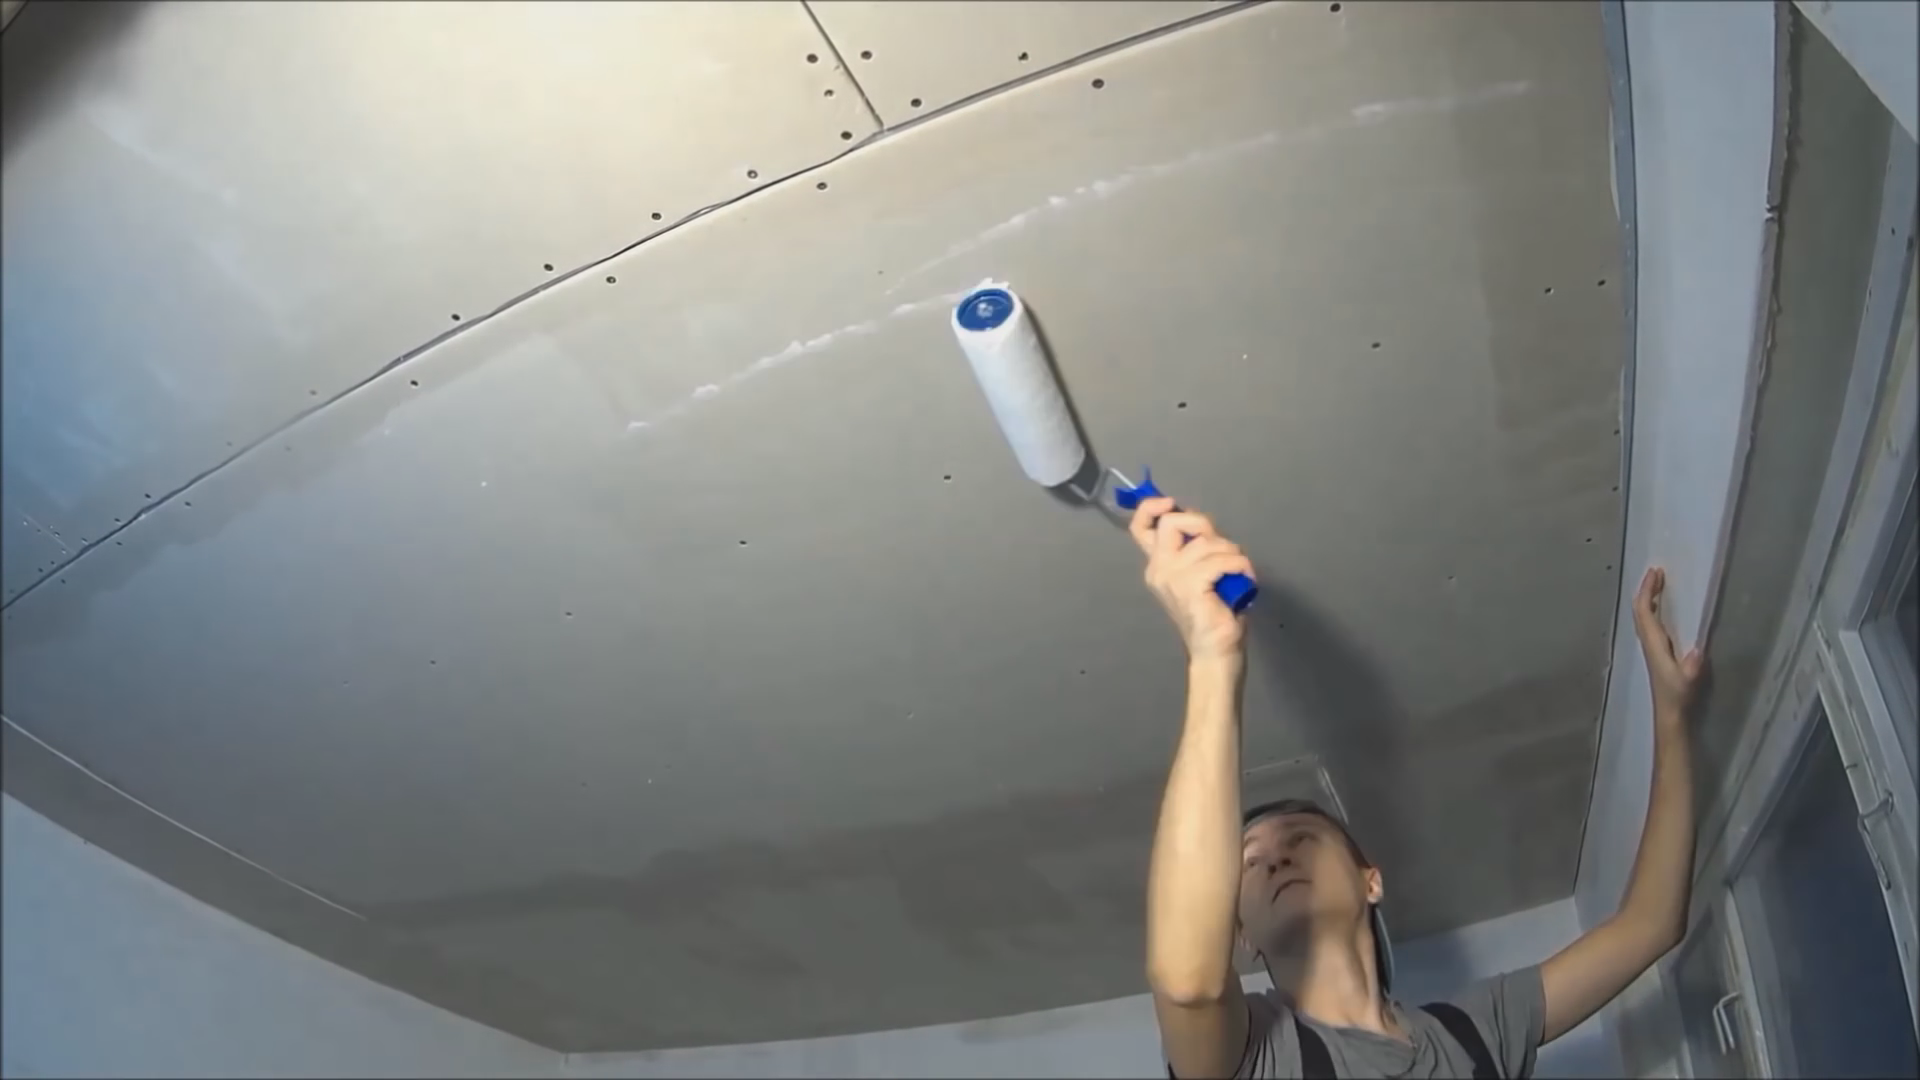 Технология шпаклевания потолка из гипсокартона под покраску – stroim24.info